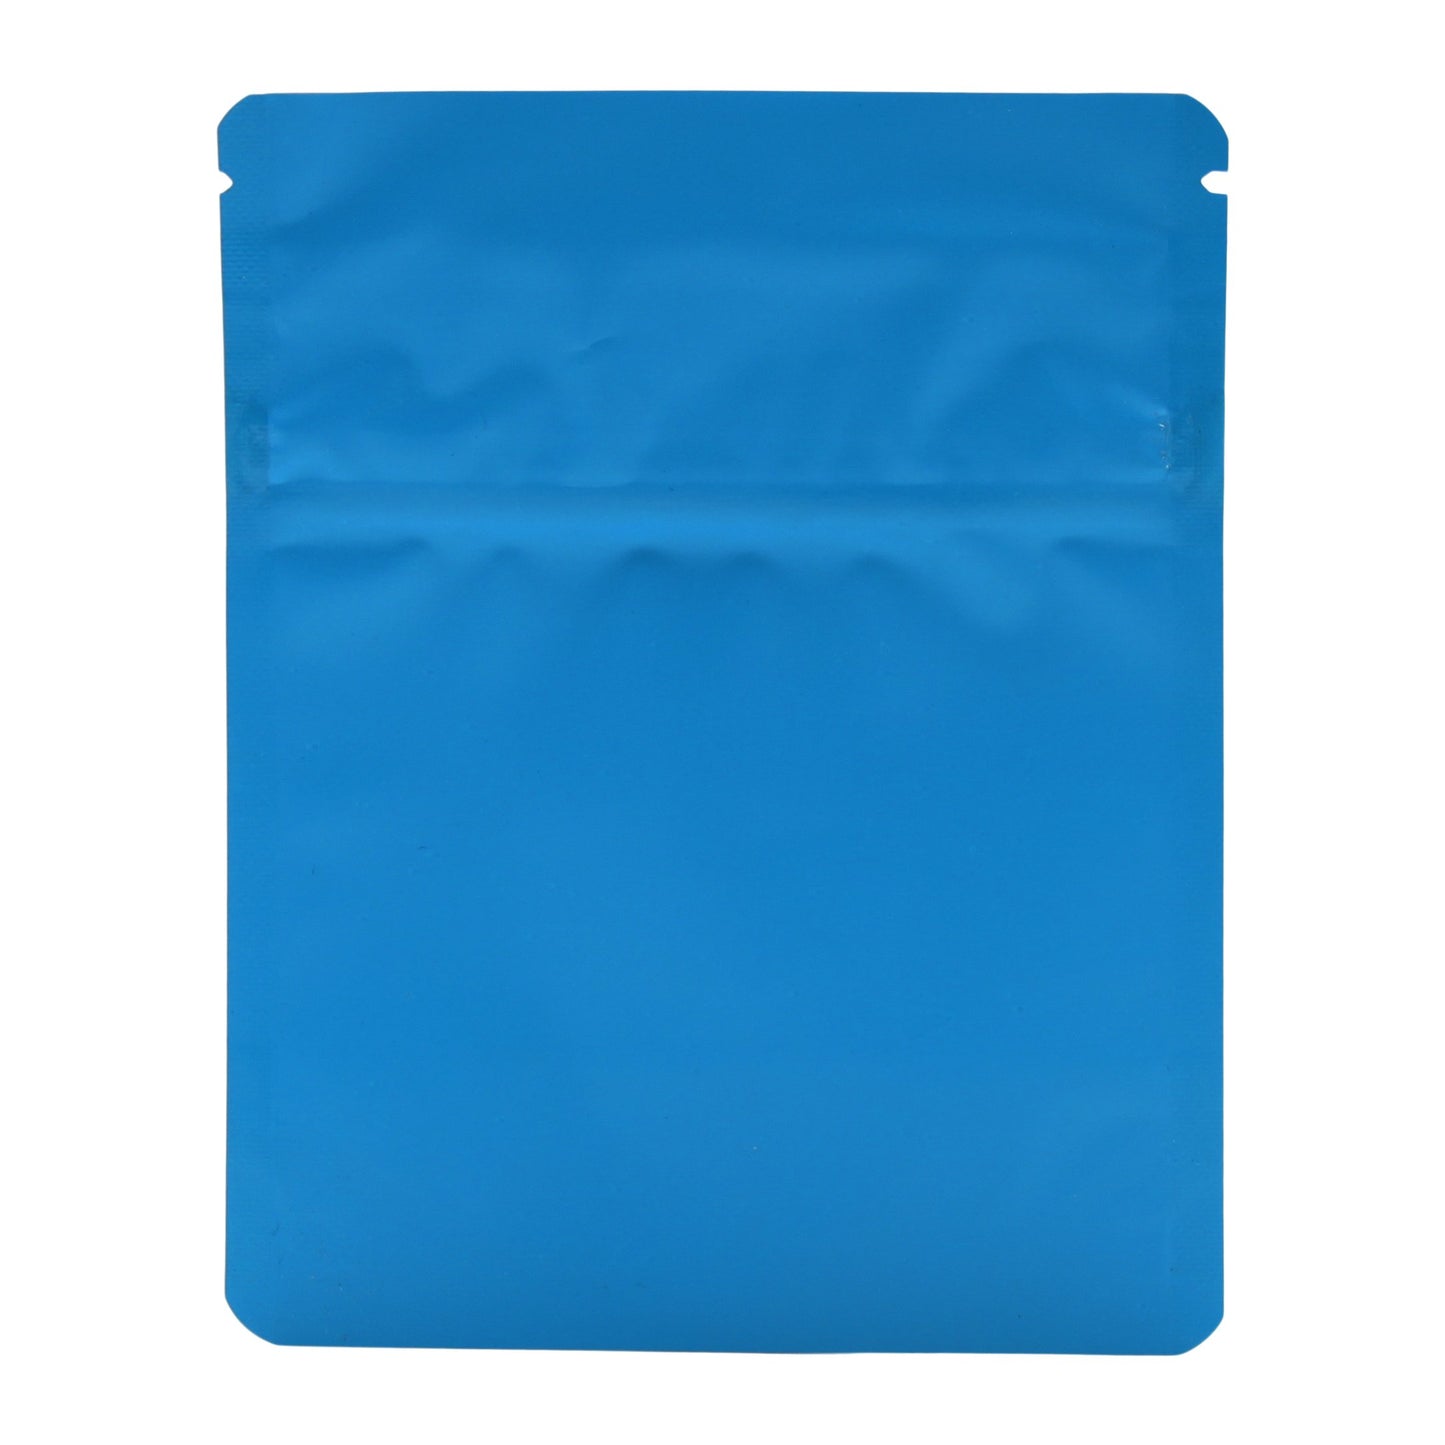 Bag King Child-Resistant Opaque Wide Mouth Bag (1/8th oz) 3.9" x 4.9" Matte Blue